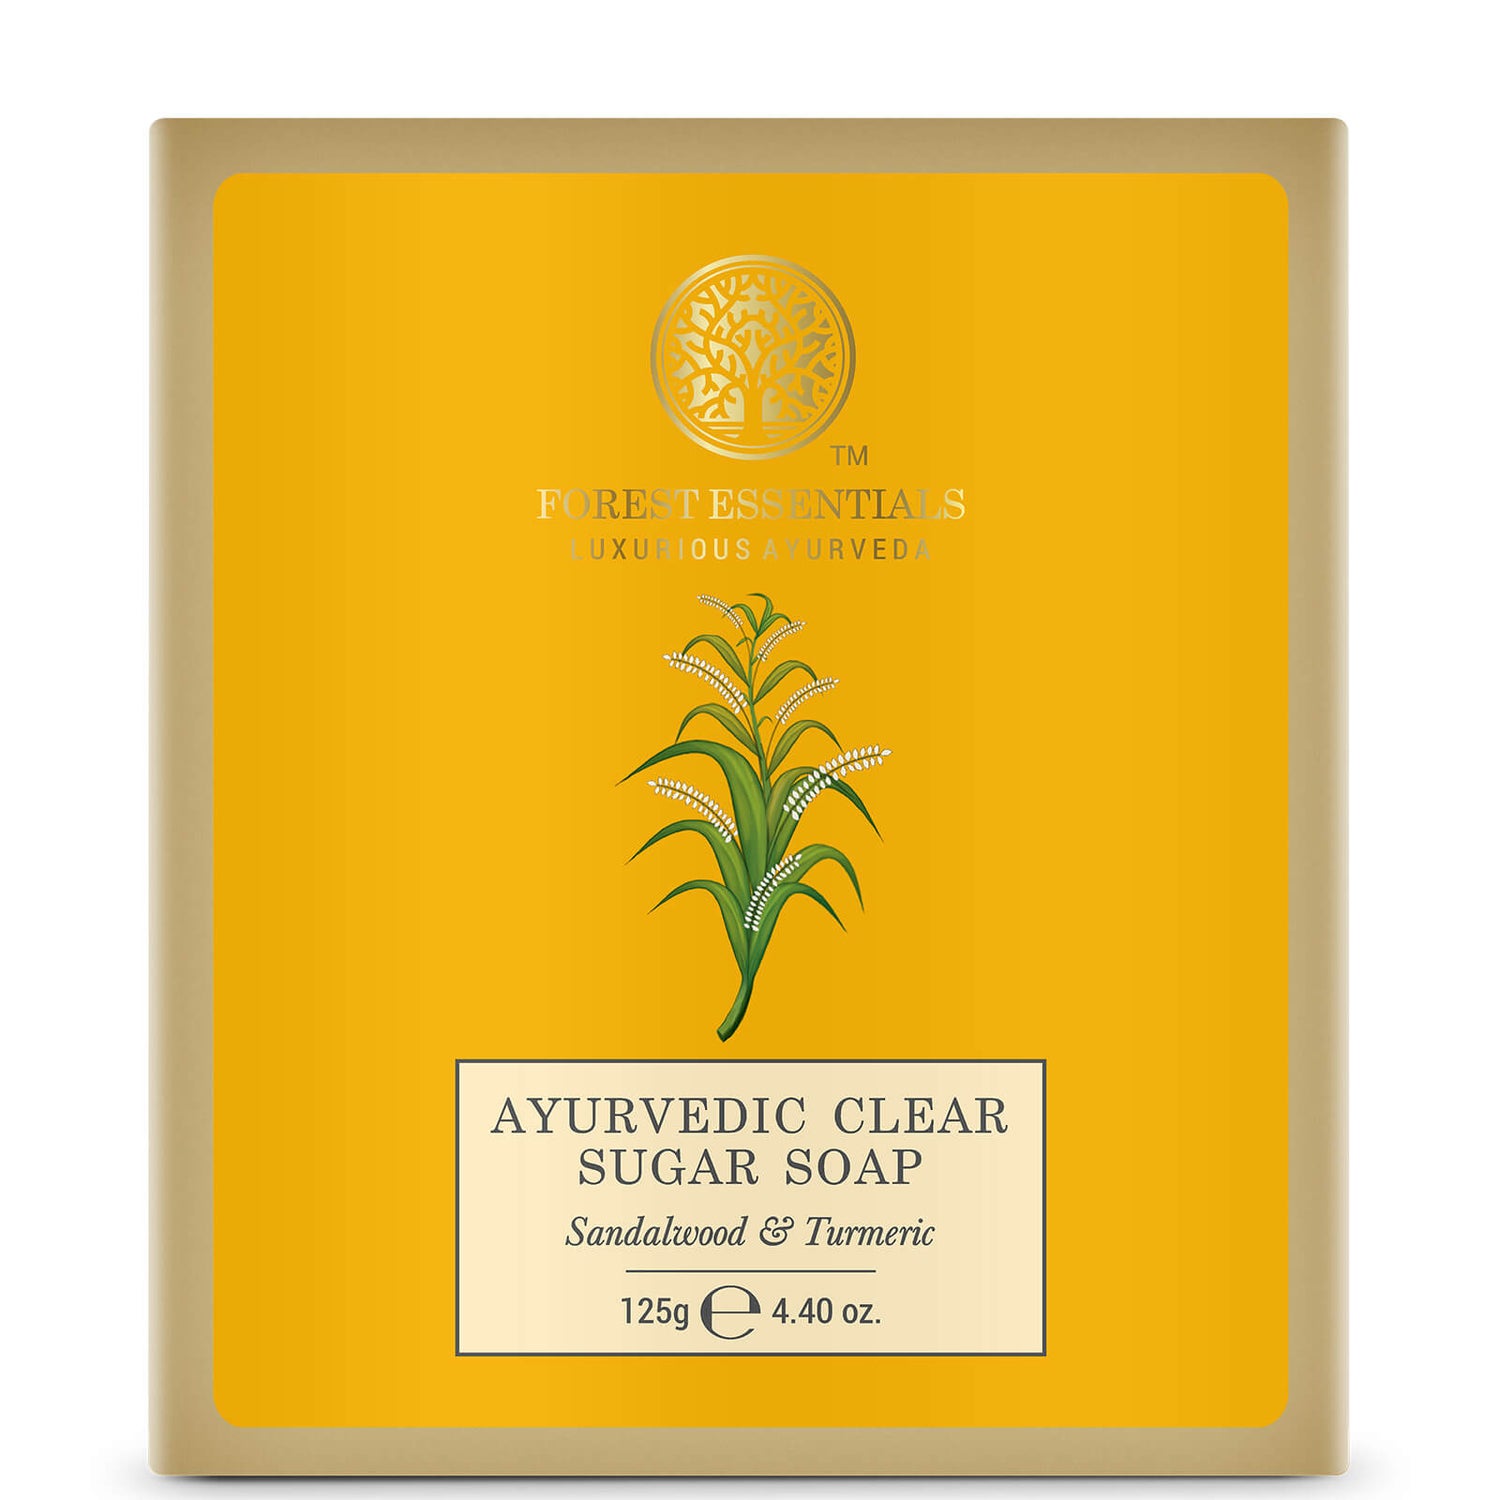 Forest Essentials Ayurvedic Clear Sugar Soap - Sandalwood and Turmeric 125g